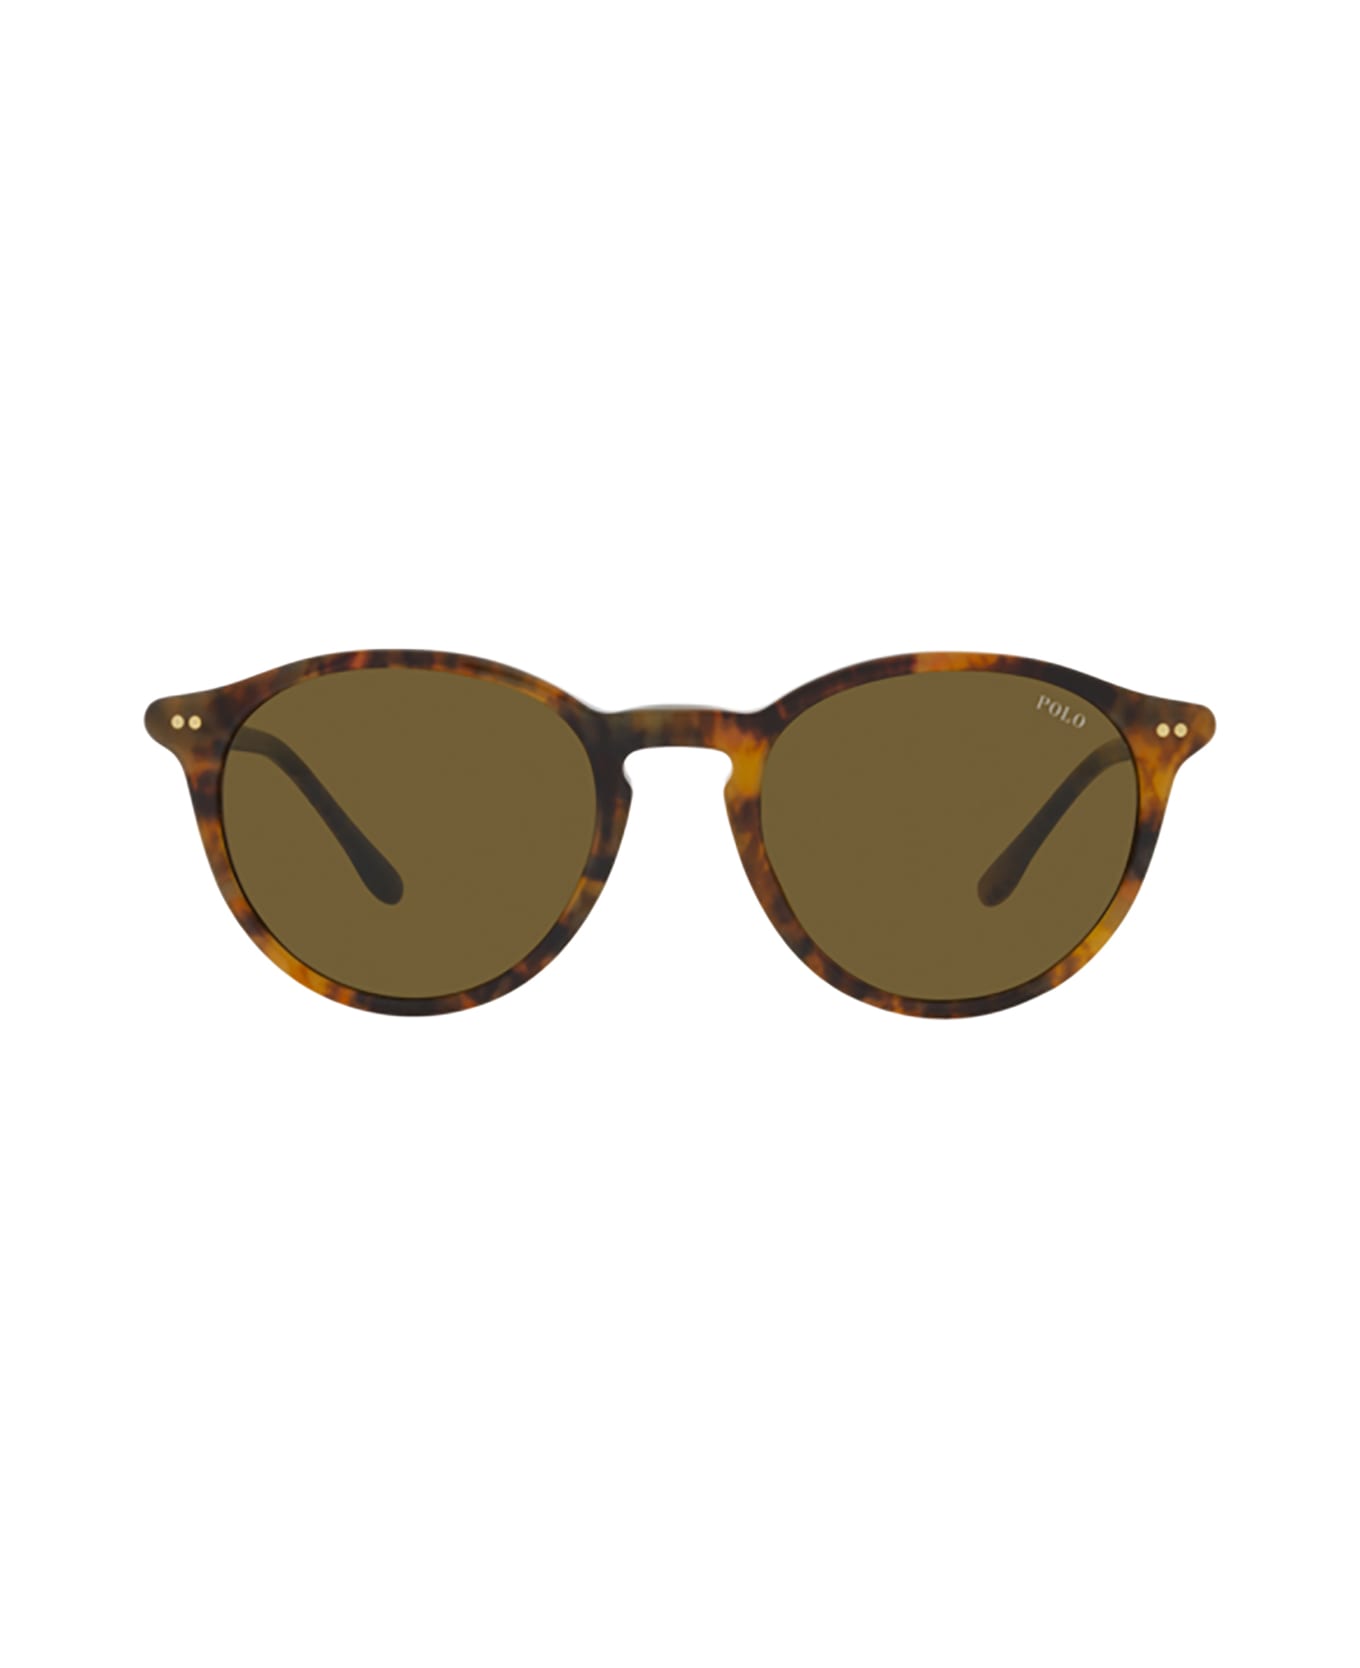 Polo Ralph Lauren Ph4193 Shiny Beige Tortoise Sunglasses - Shiny Beige Tortoise サングラス